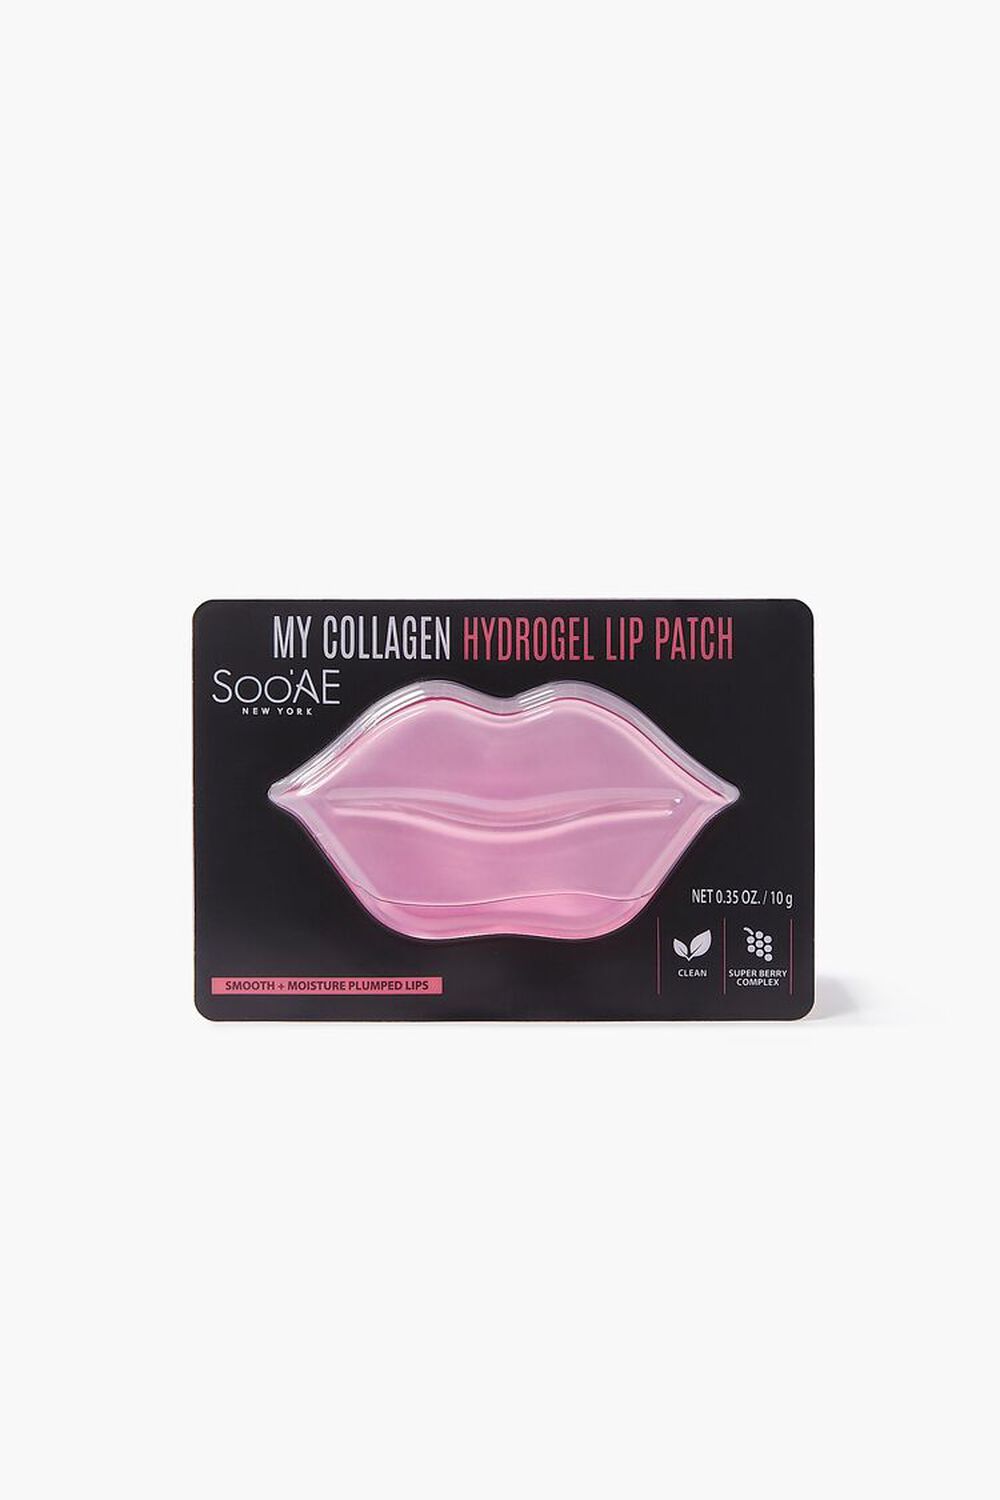 SooAe Collagen Lip Patch, image 1